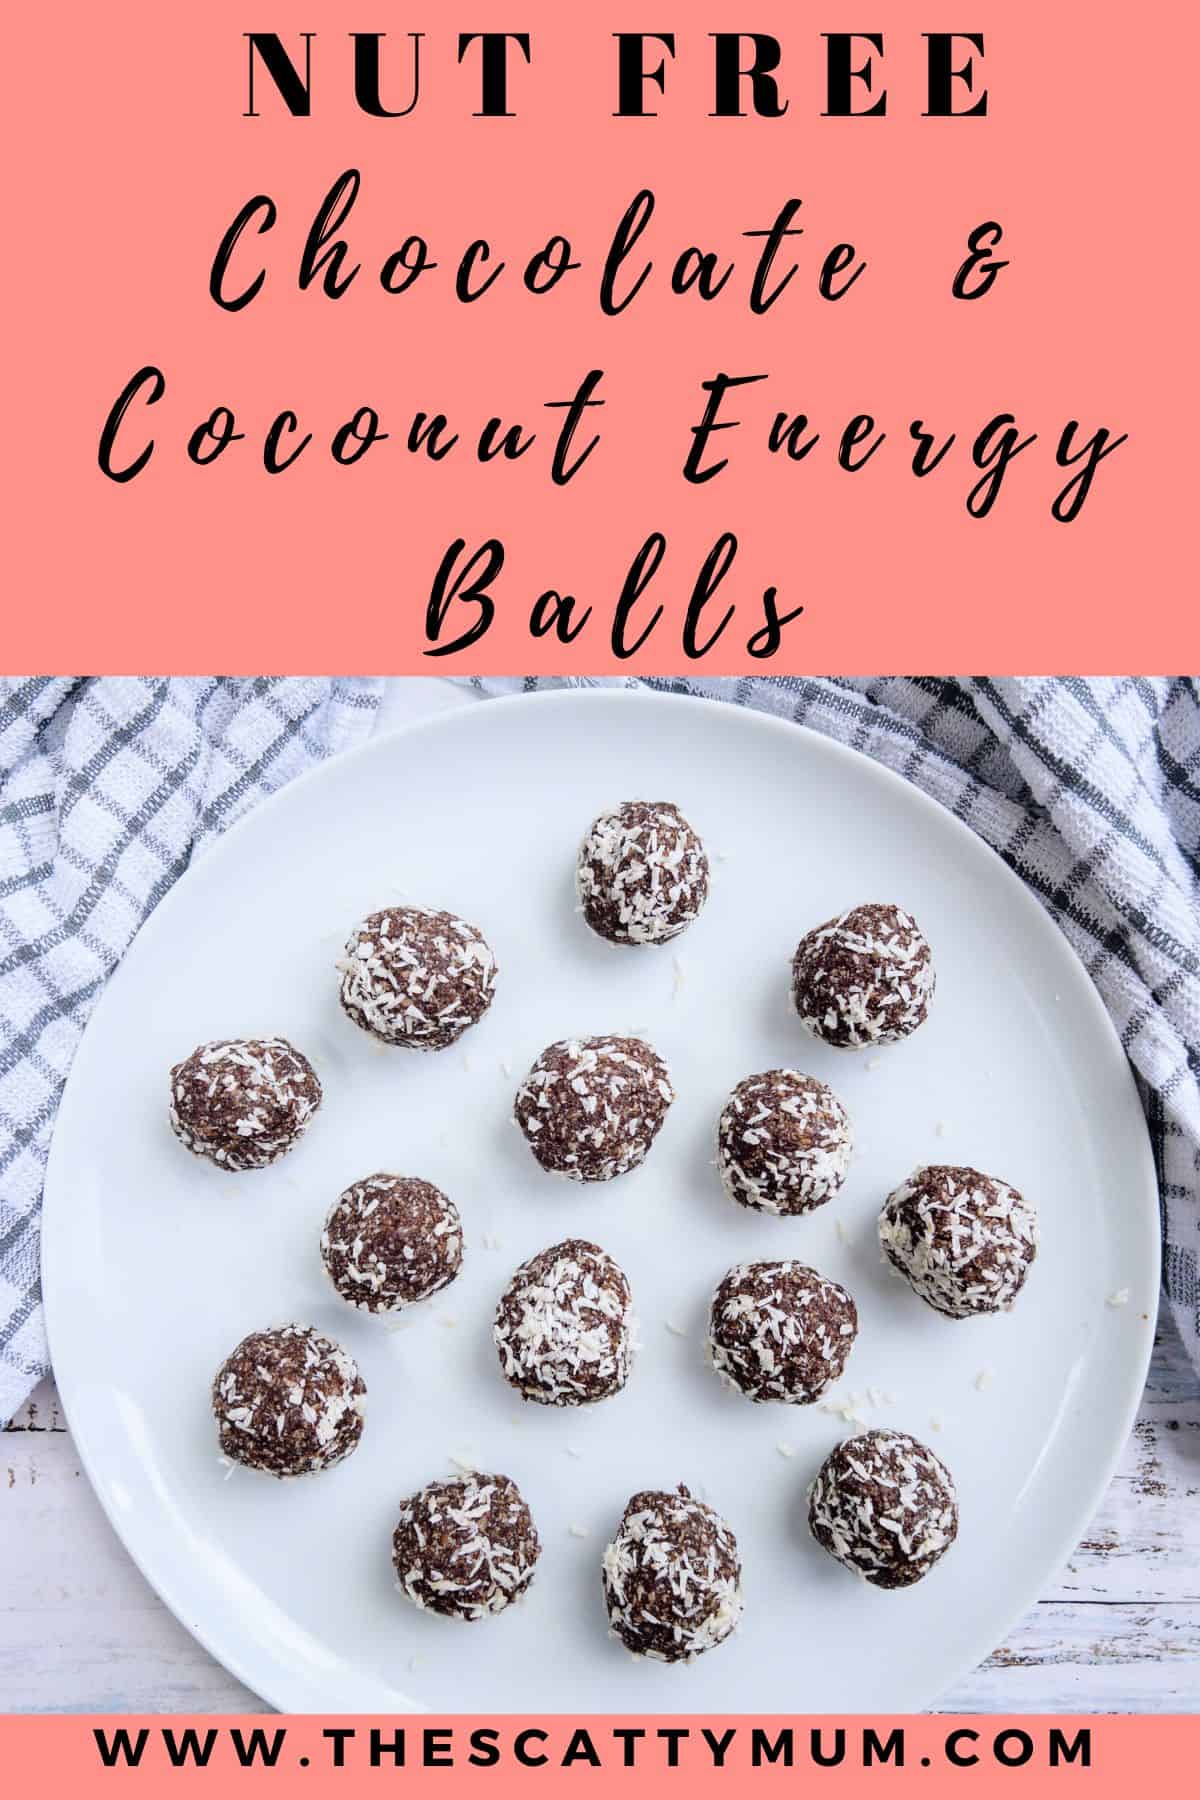 Pinterest image of chocolate & coconut date balls